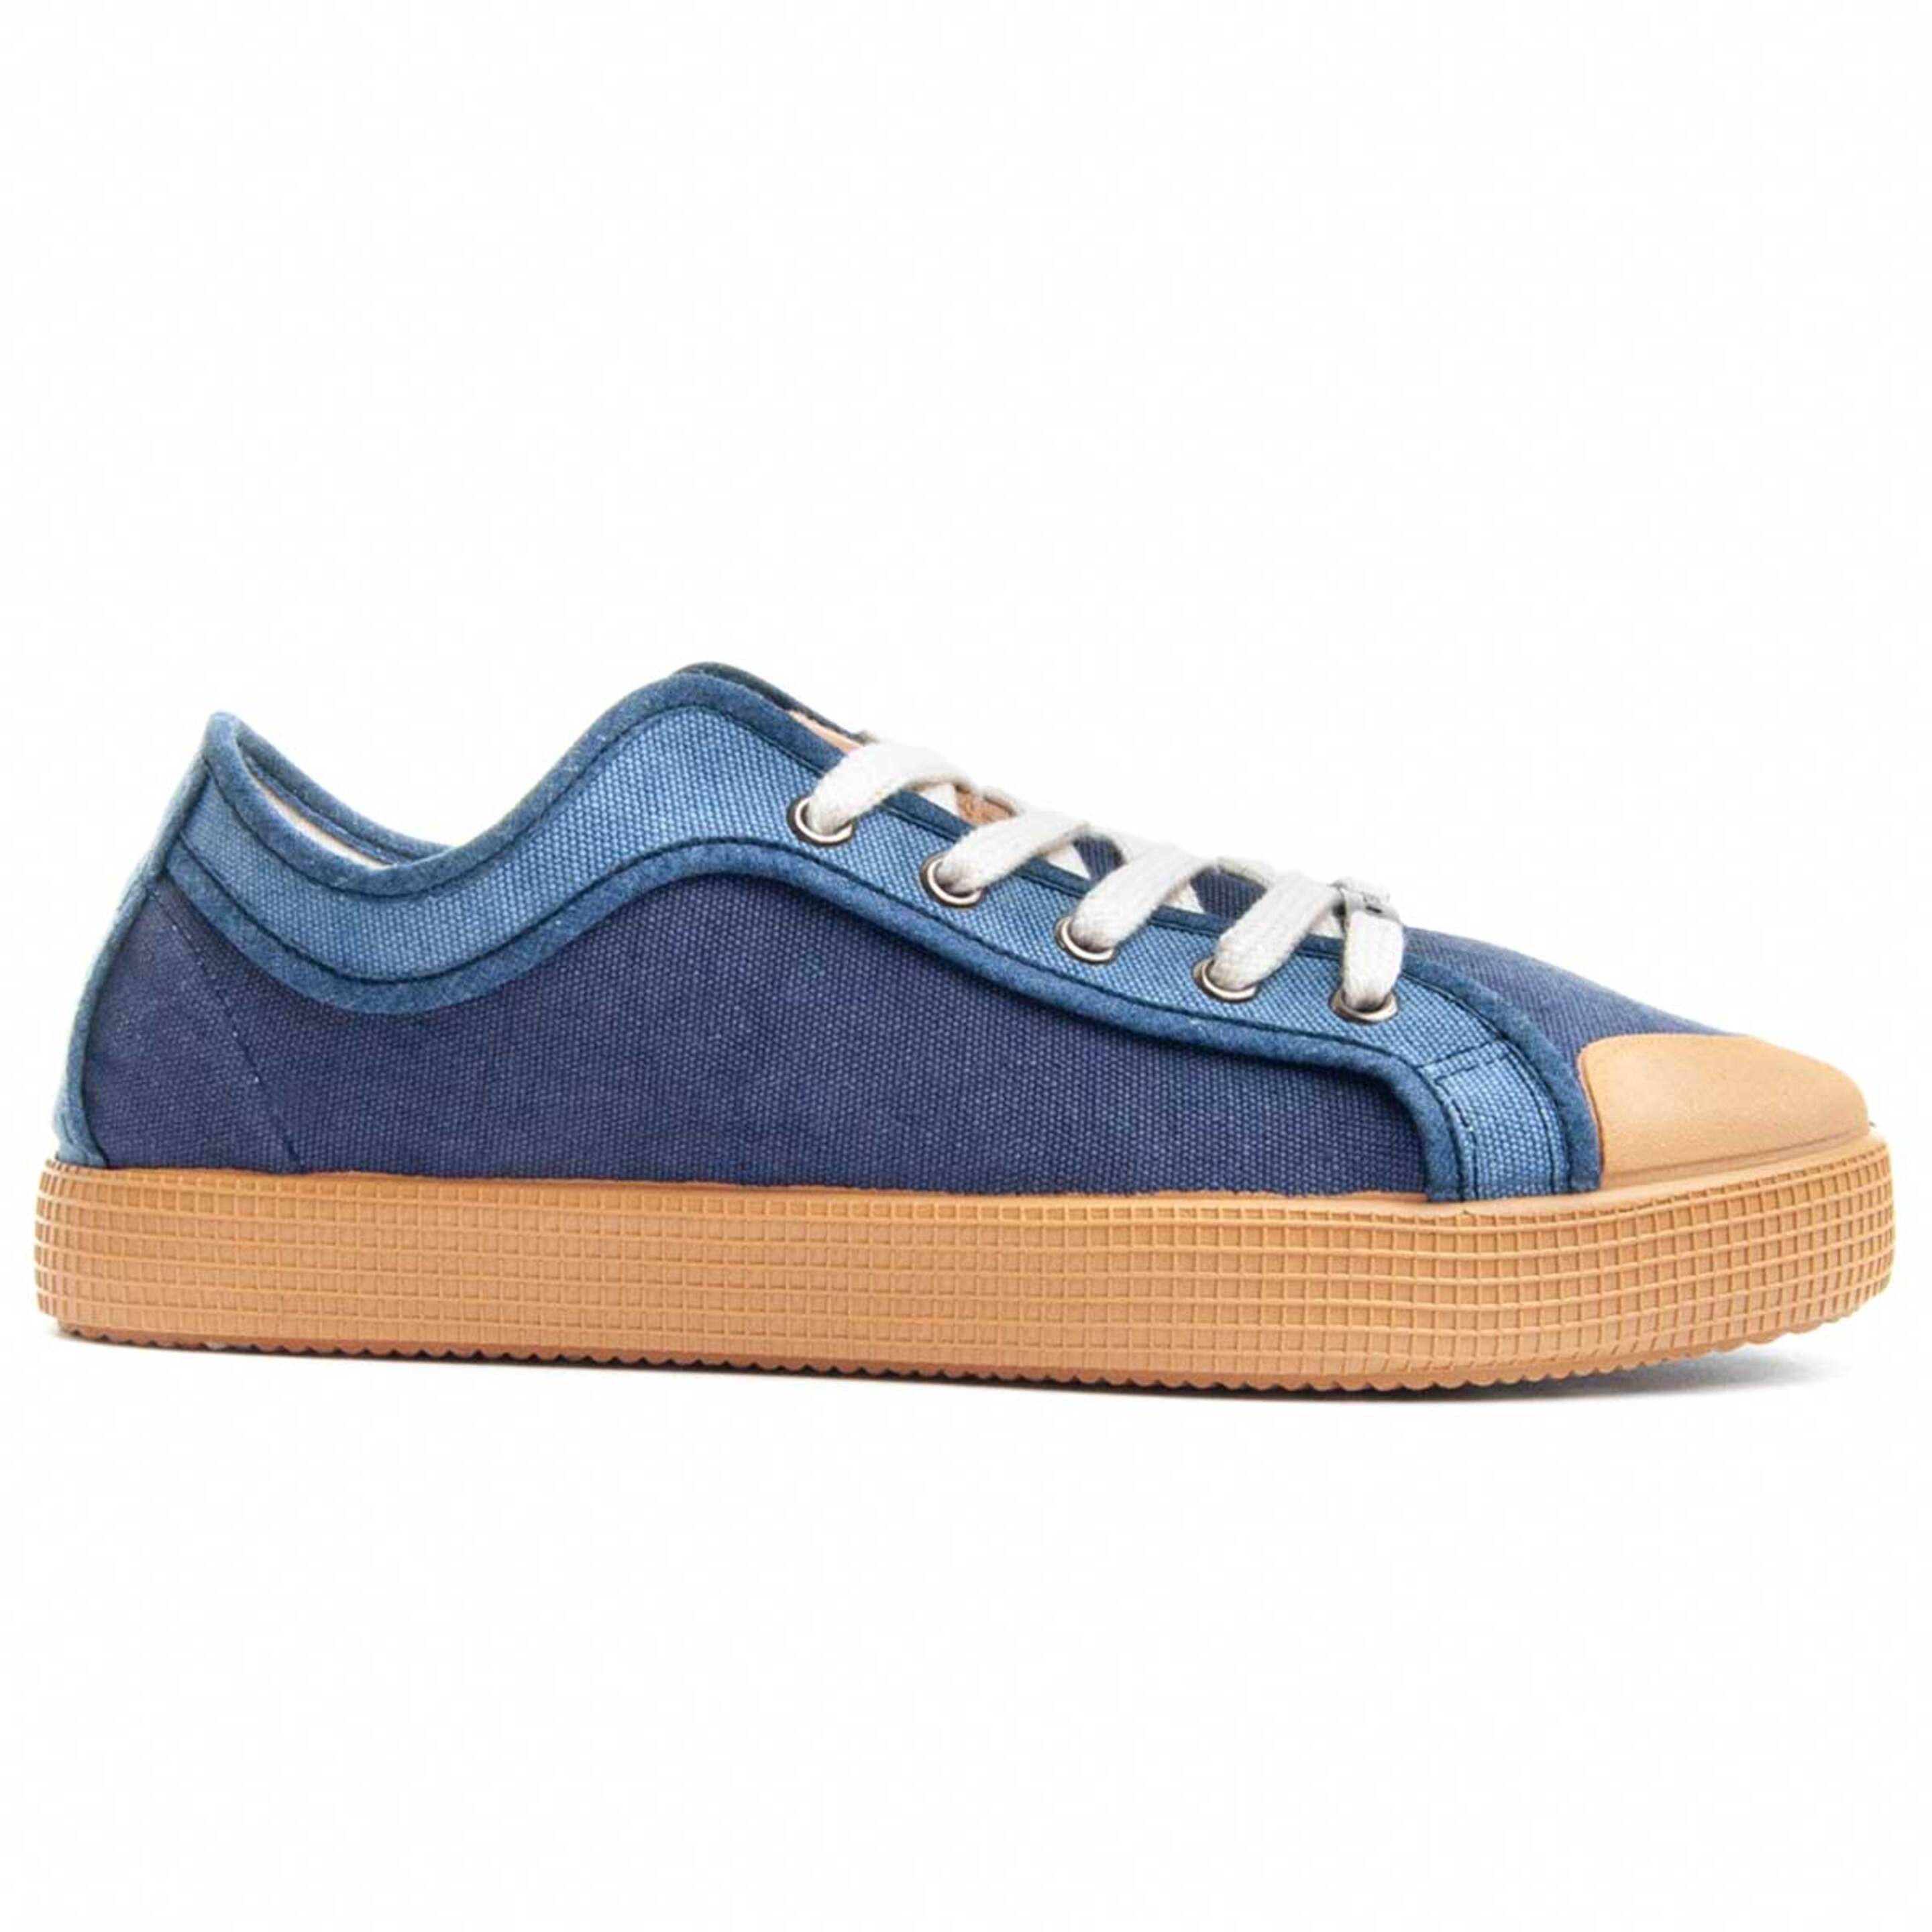 Sneaker Comoda Montevita Maltintom - azul - 